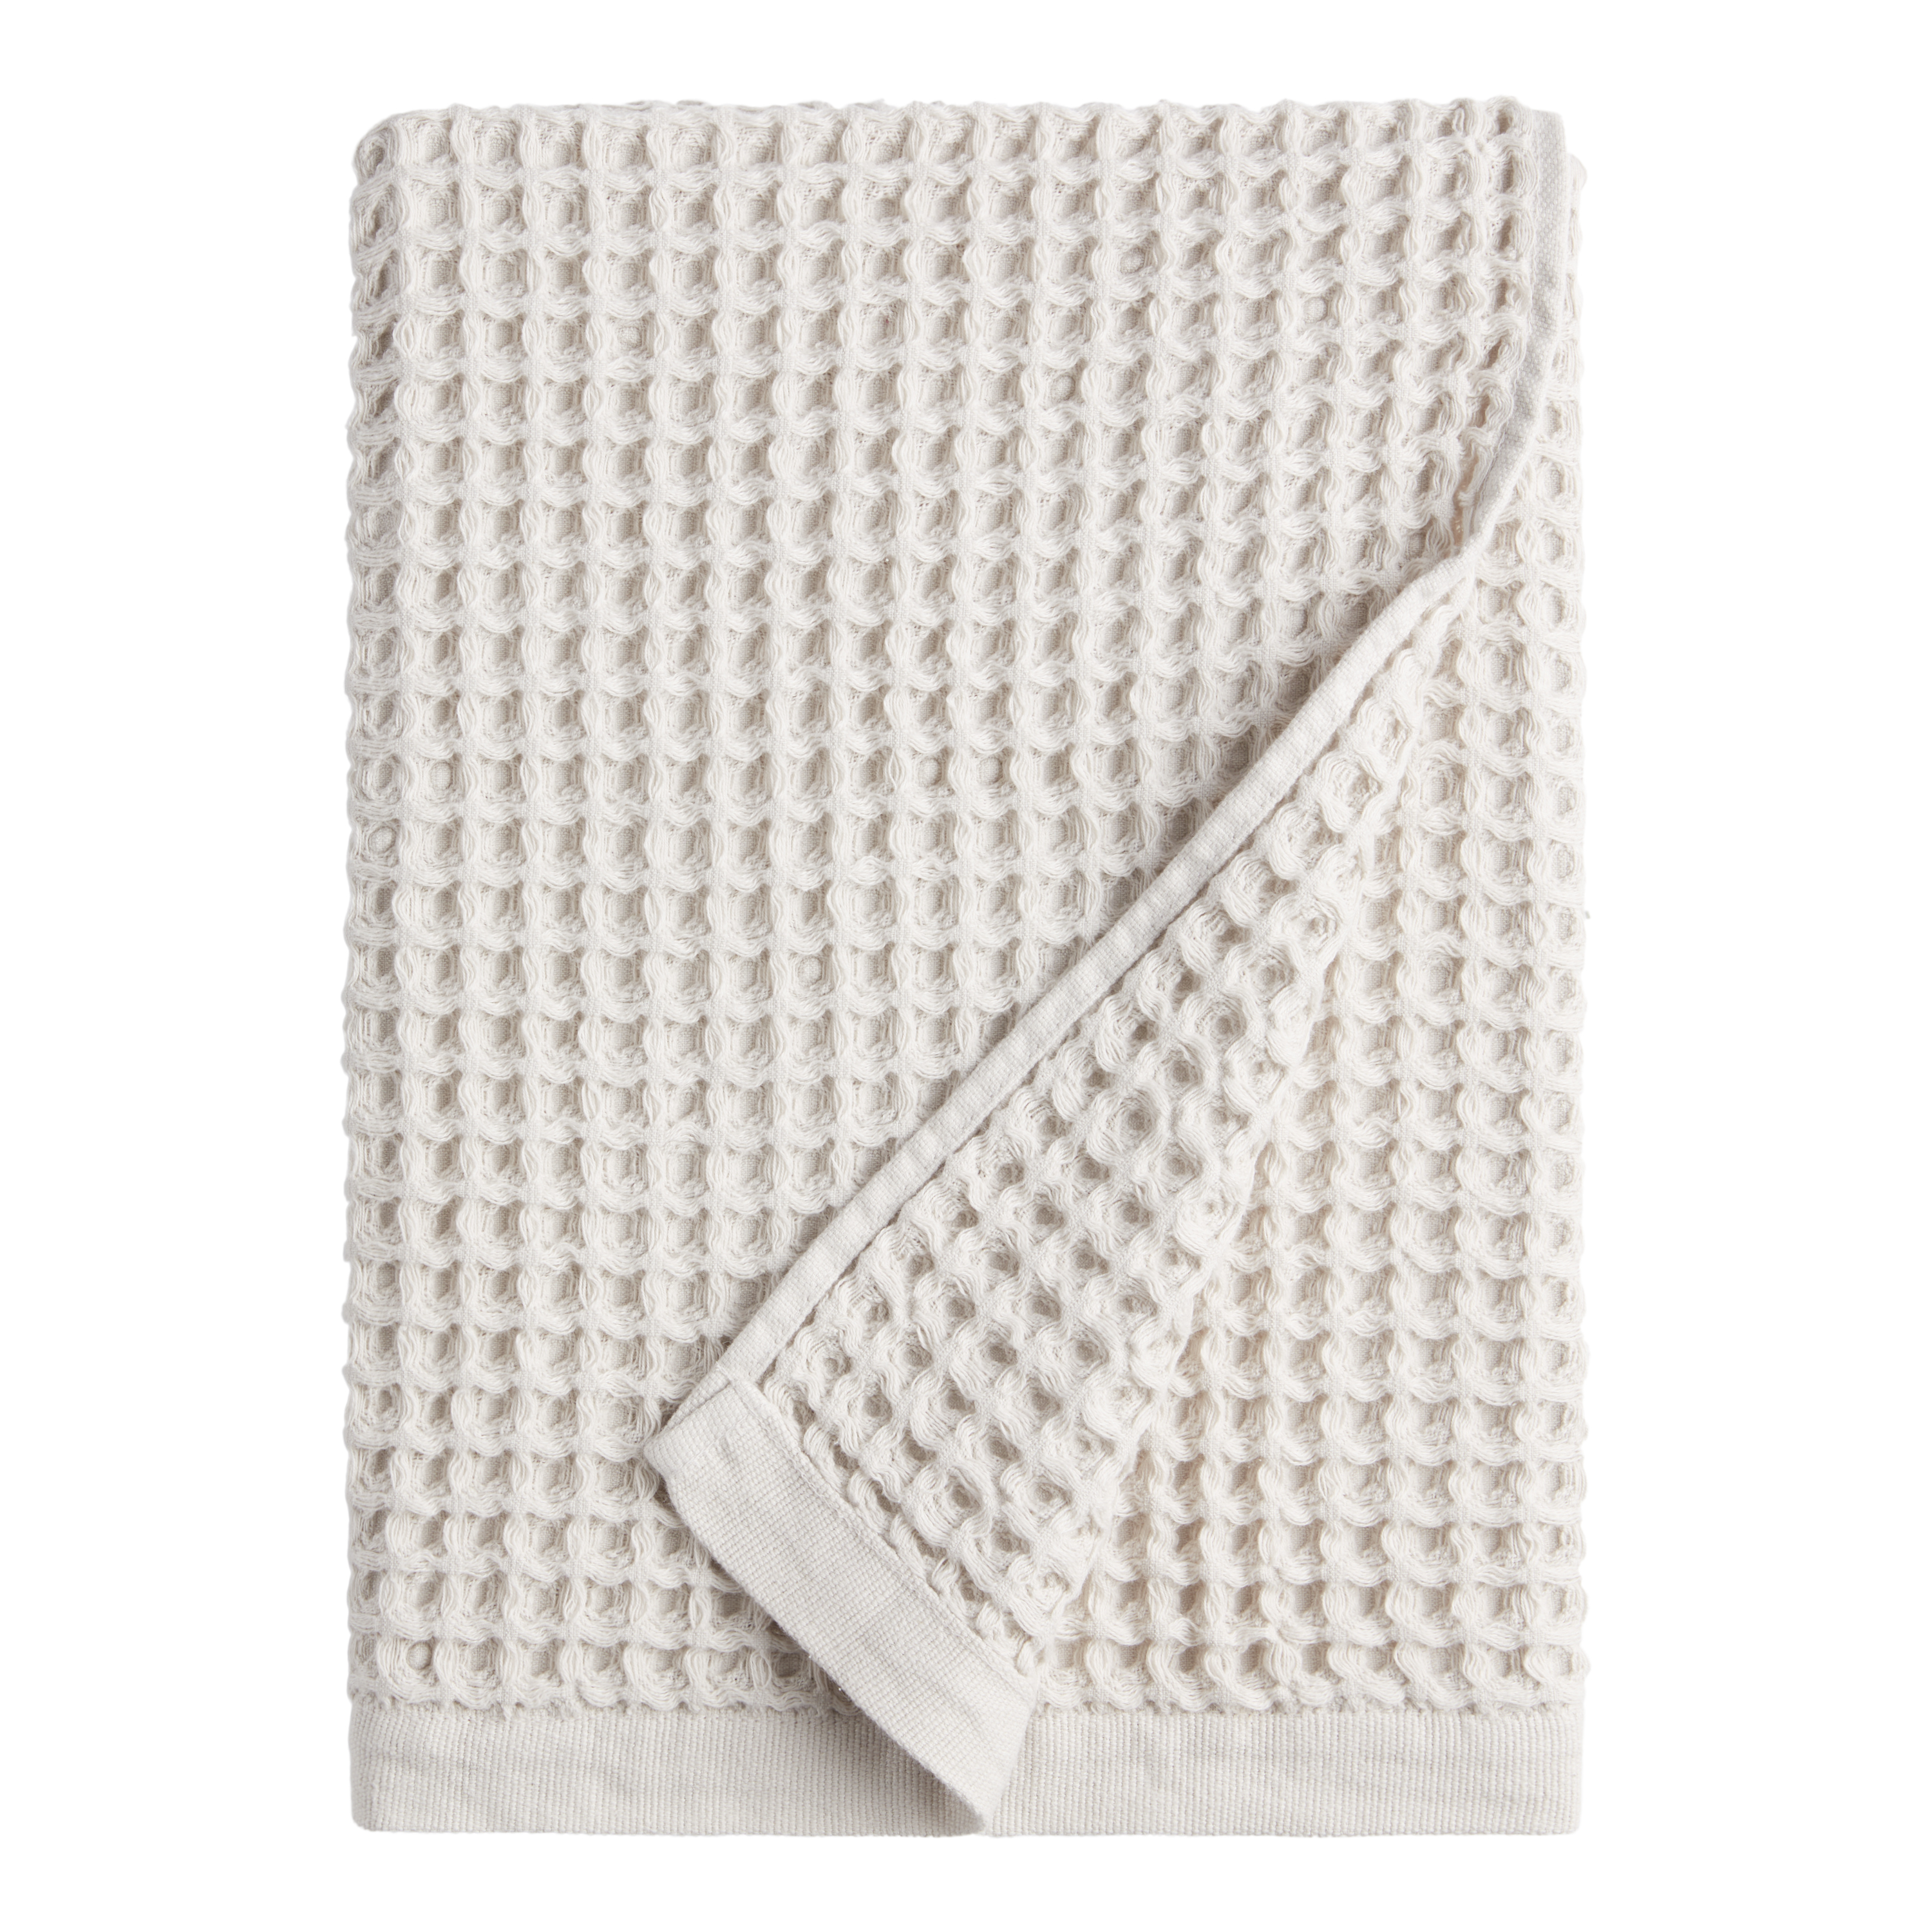 Waffle Wave Gray Towels - Ceramic Pro